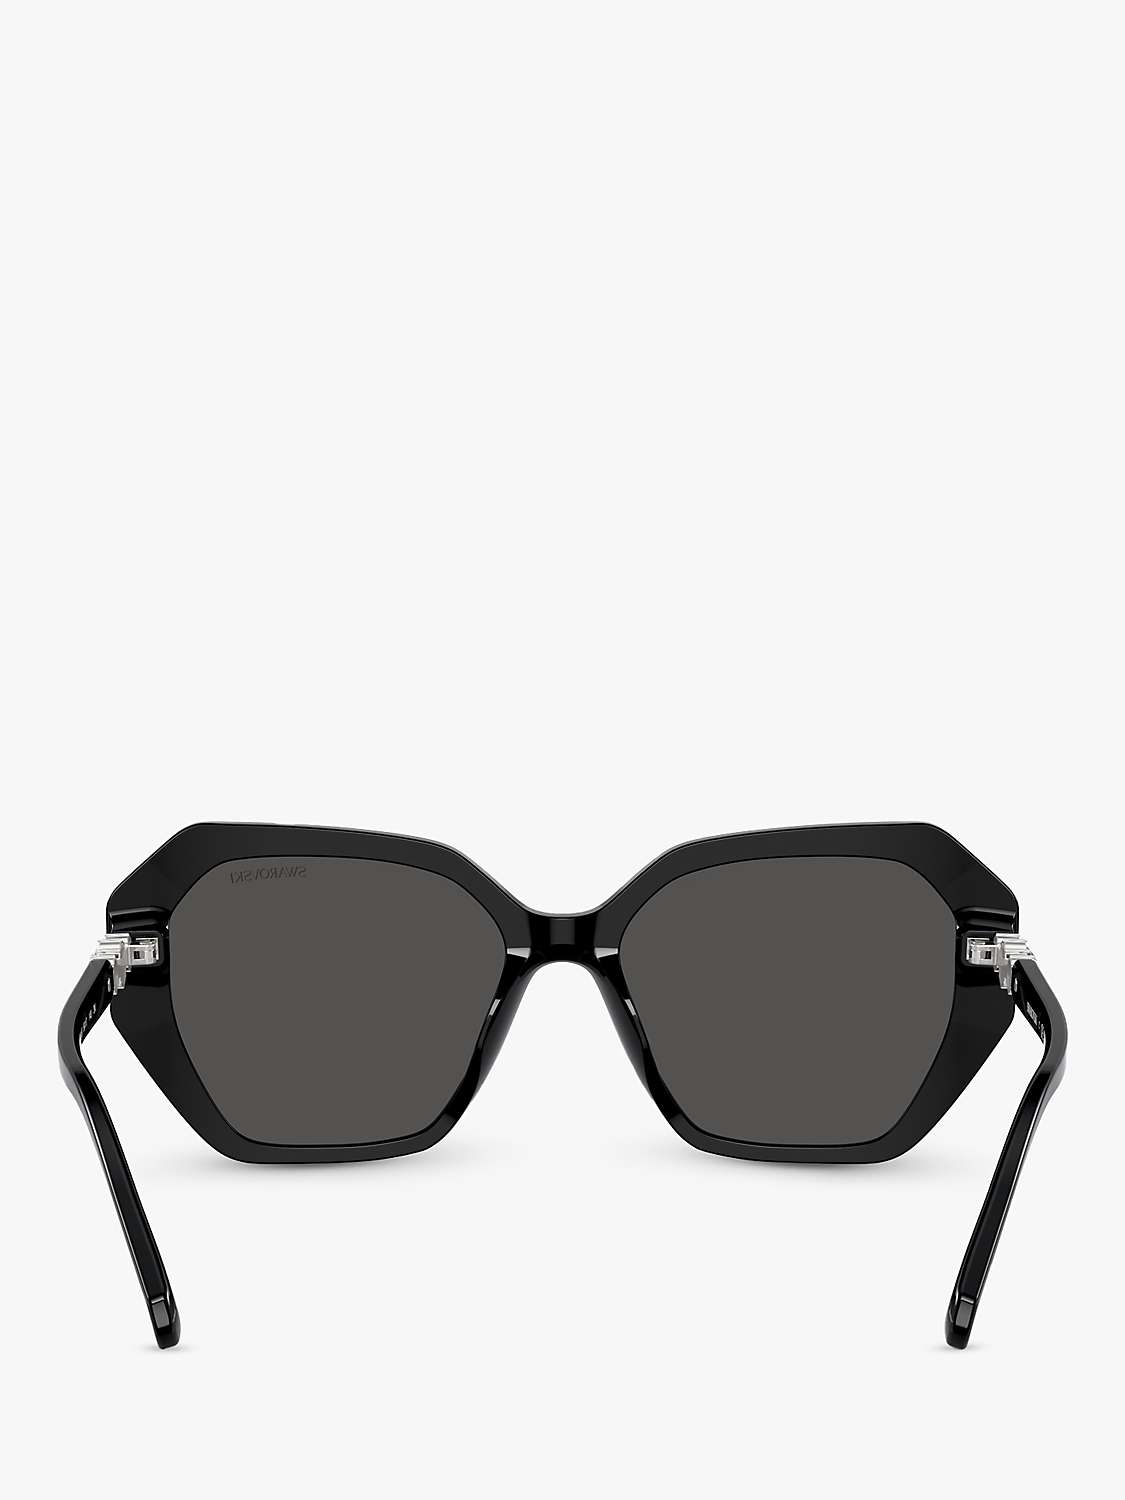 Buy Swarovski SK6017 Women's Irregular Sunglasses, Black/Grey Online at johnlewis.com